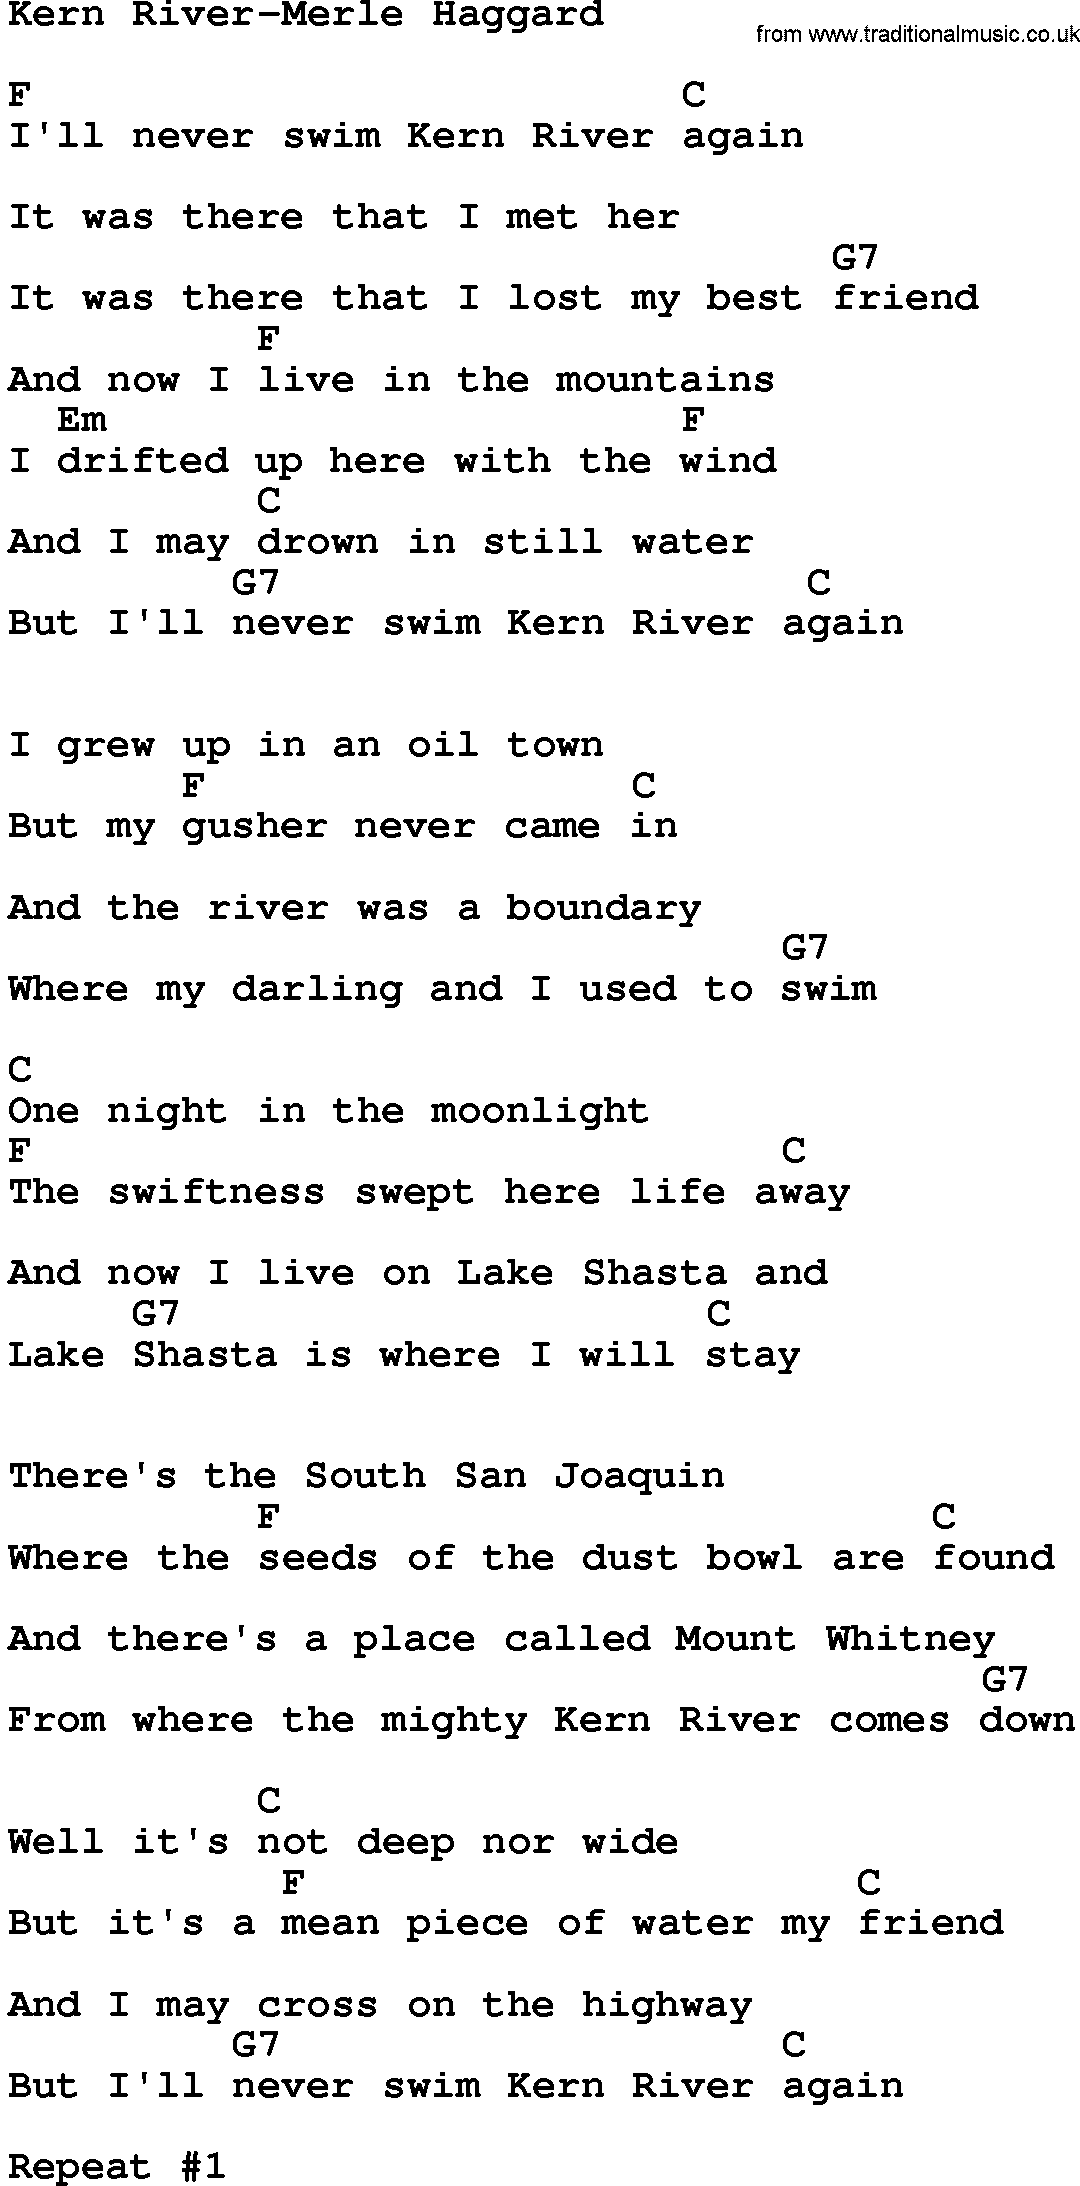 Country music song: Kern River-Merle Haggard lyrics and chords